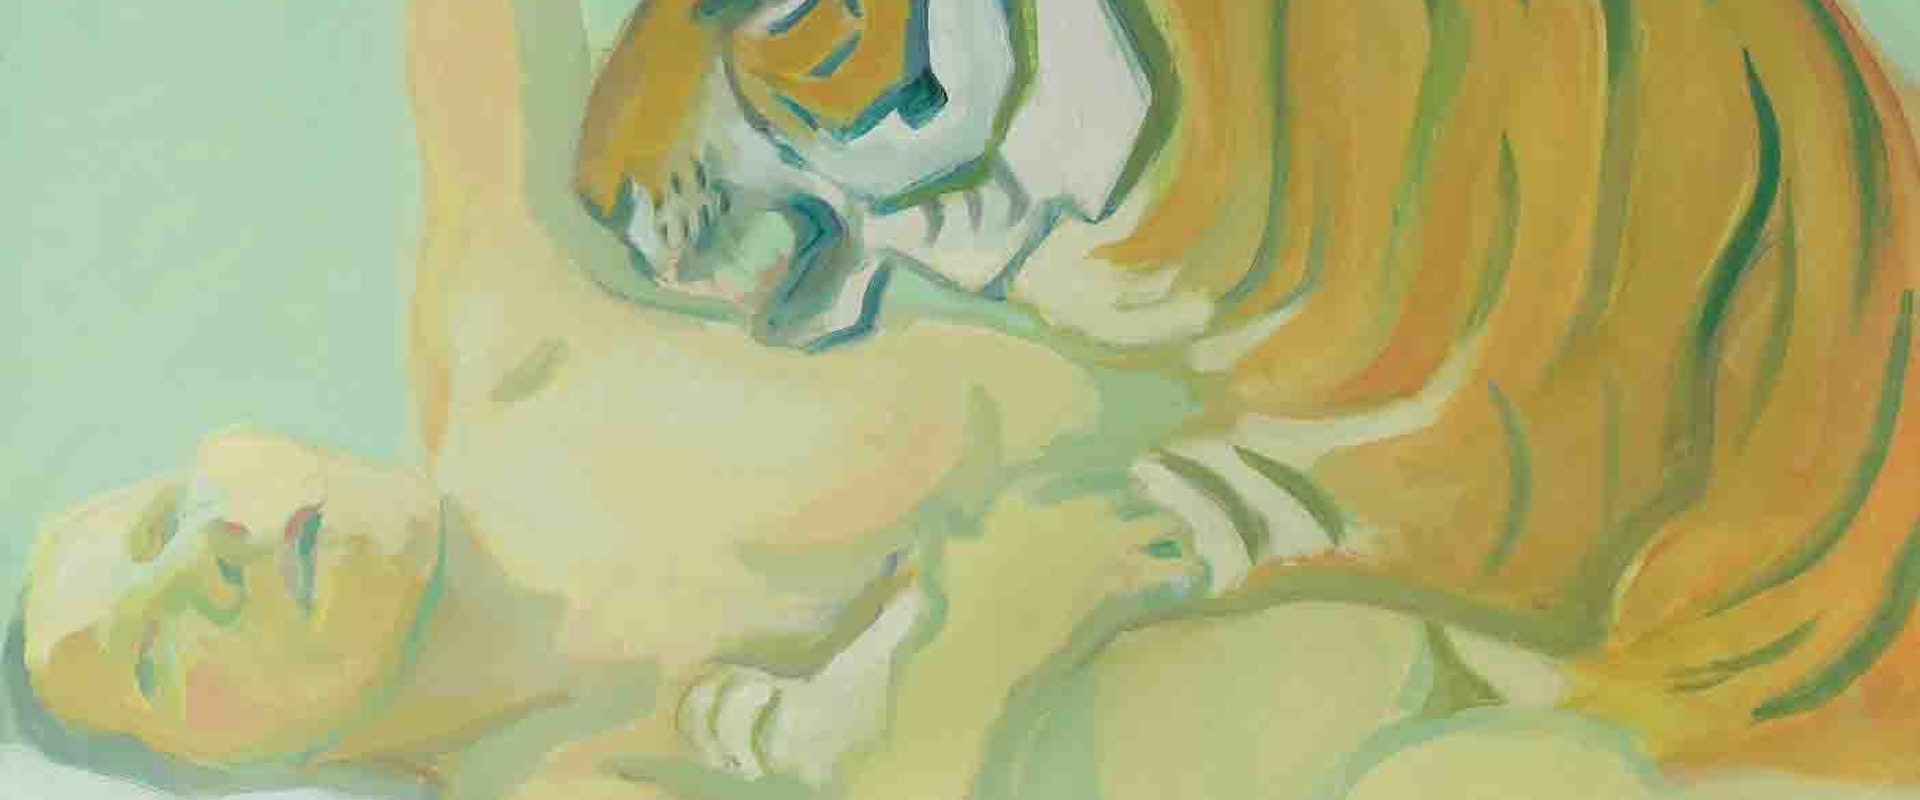 Maria Lassnig  Woman Power